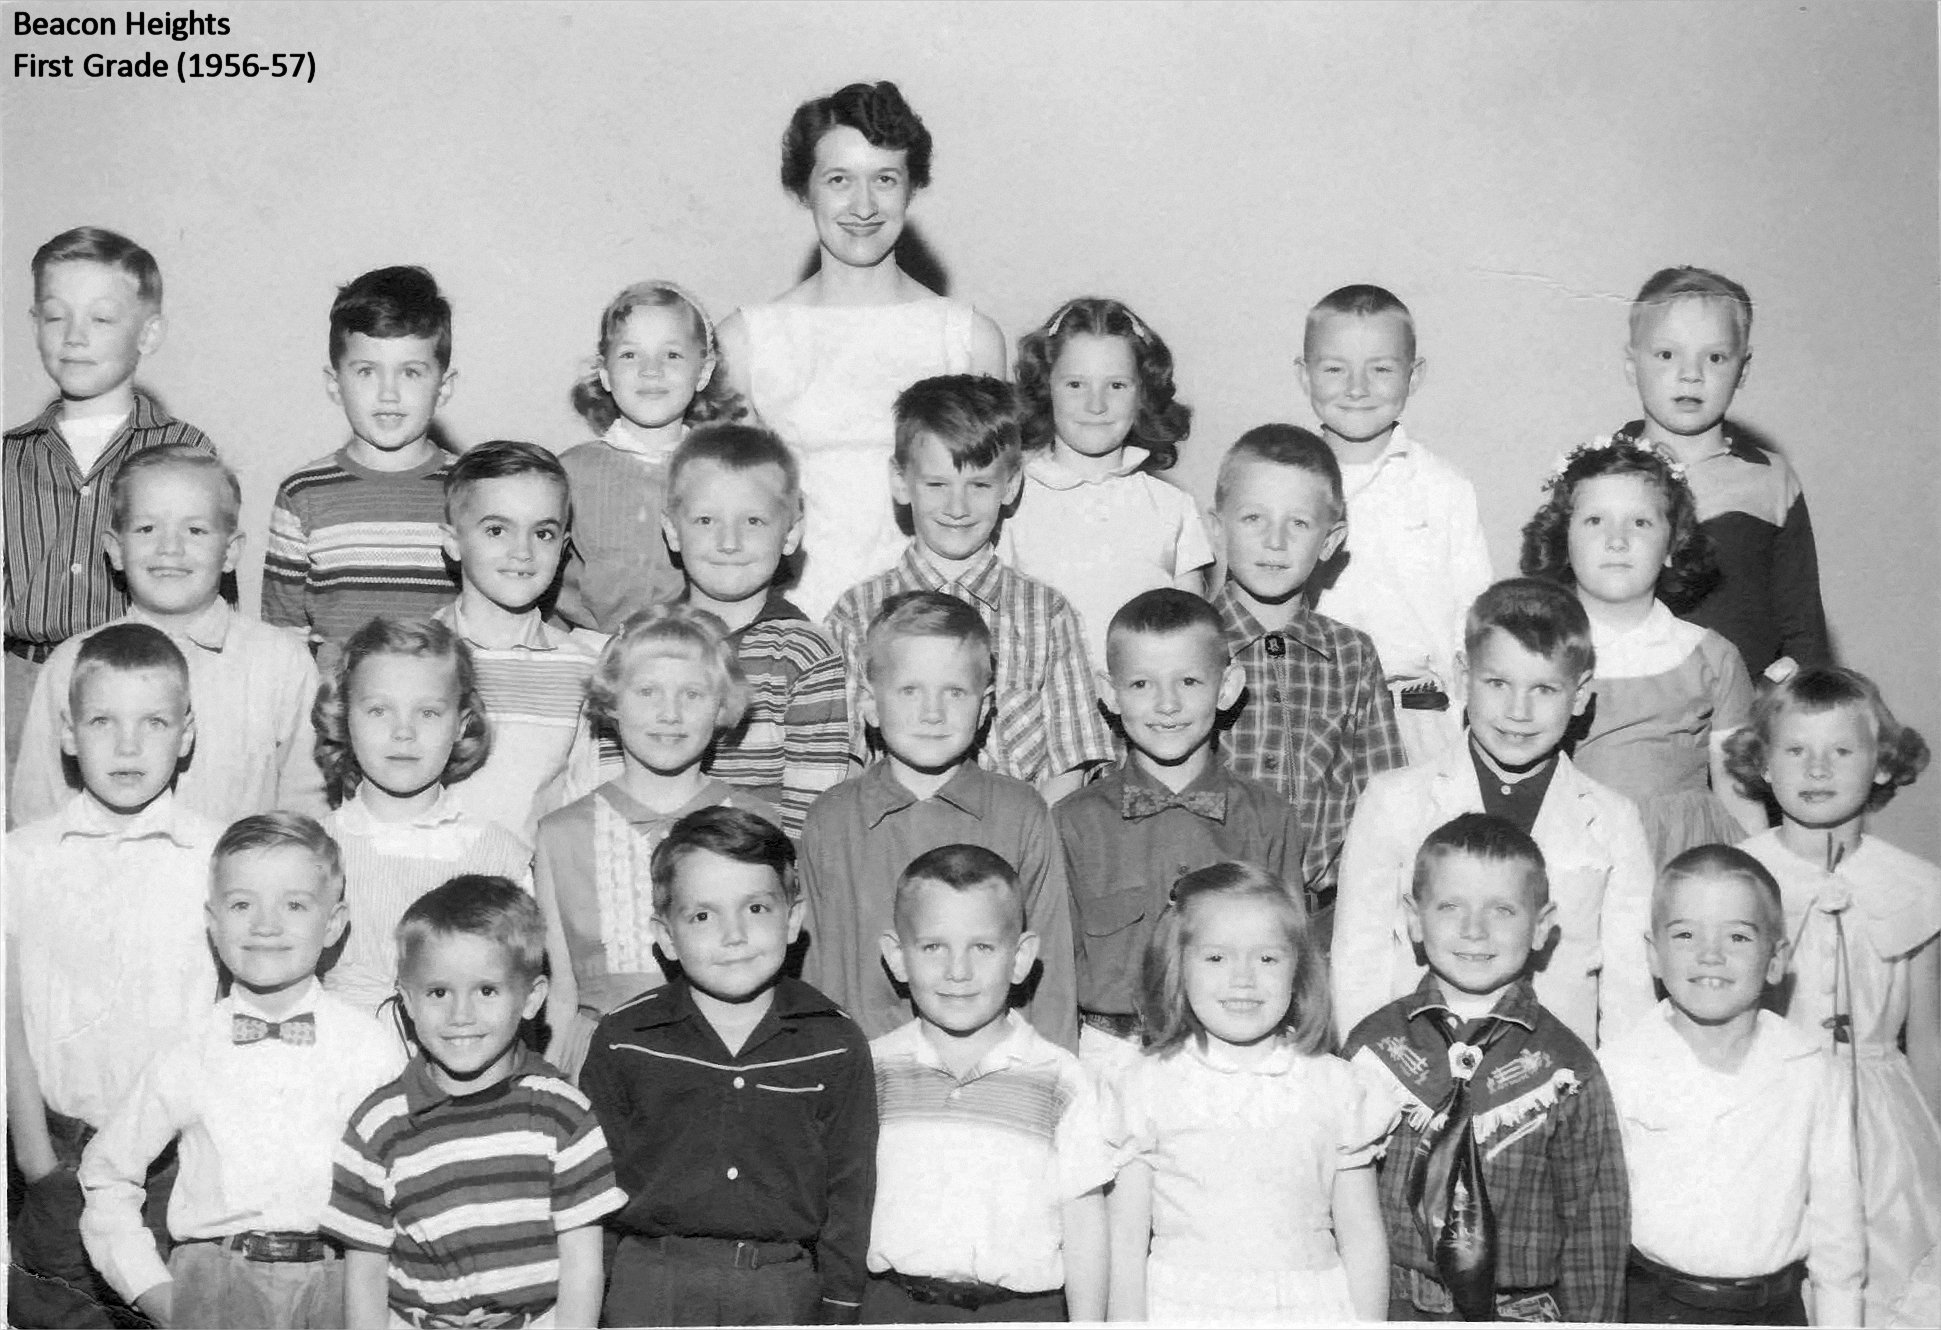 Wayzata High School Class of 1968 Beacon Heights(2) 1st Grade Photo